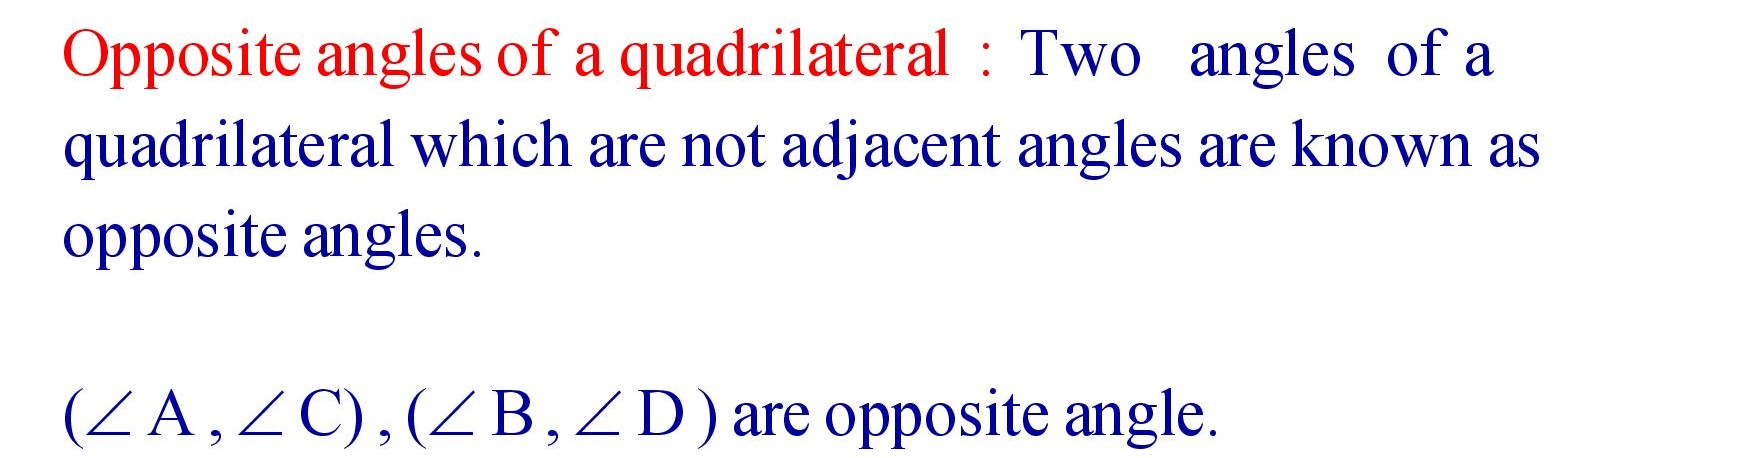 Opposite angles of Quadrilateral